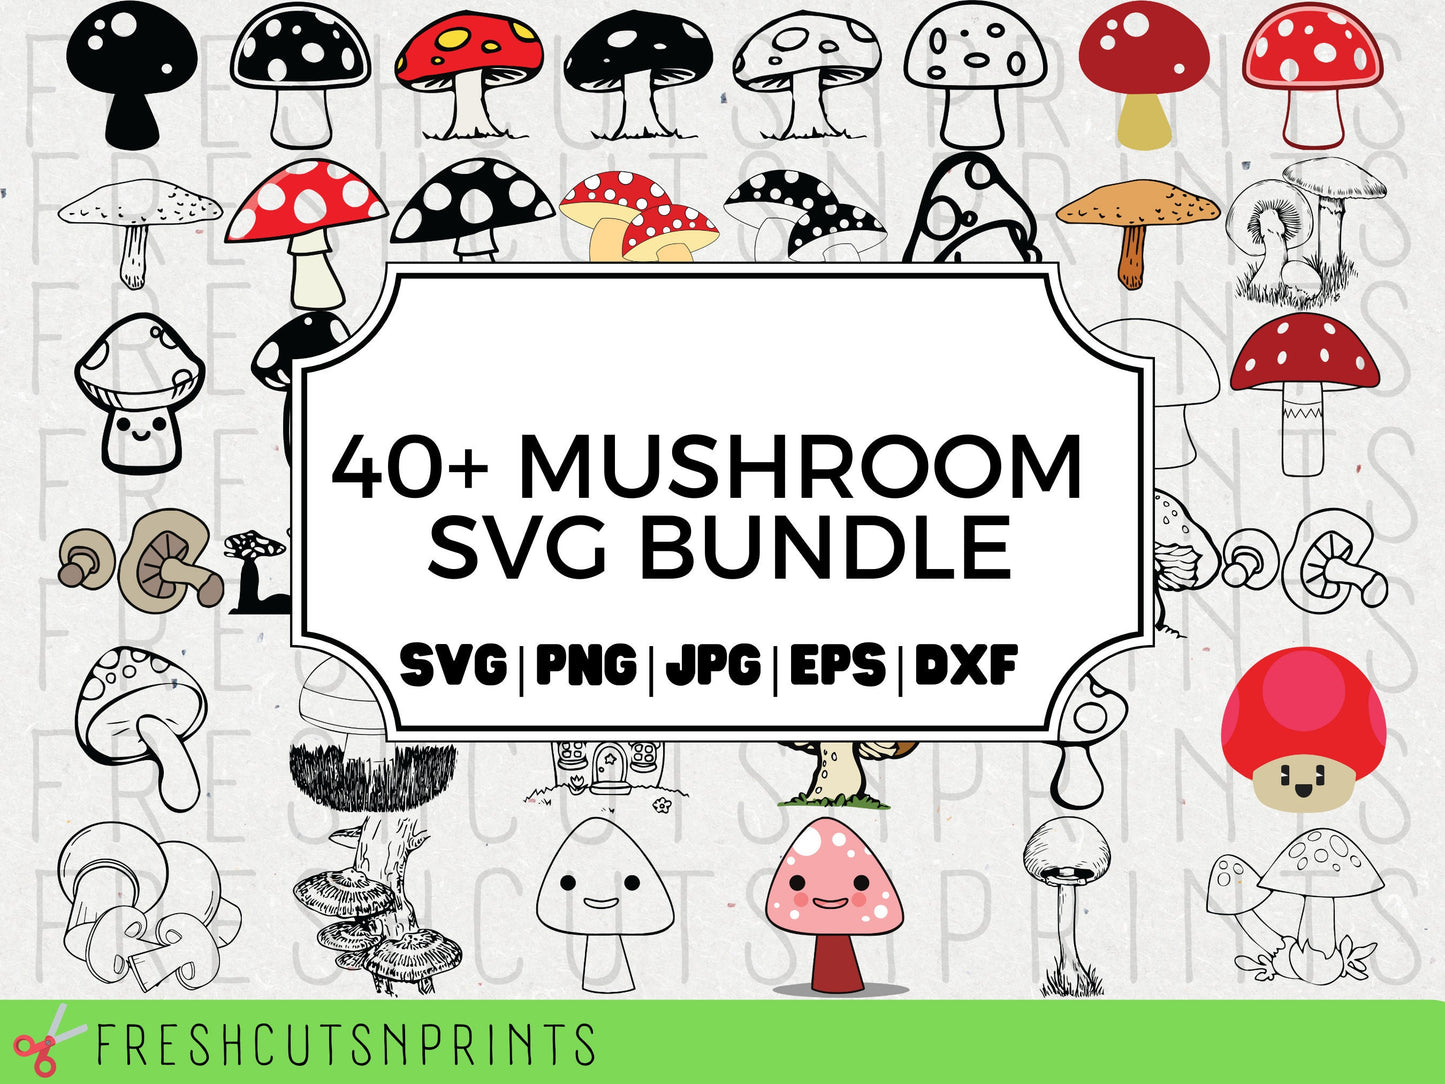 40+ Mushroom SVG Bundle, Mushroom vector, Mushroom clipart, Mushroom cut file, witchy svg, celestial mushroom svg, mushroom decal svg